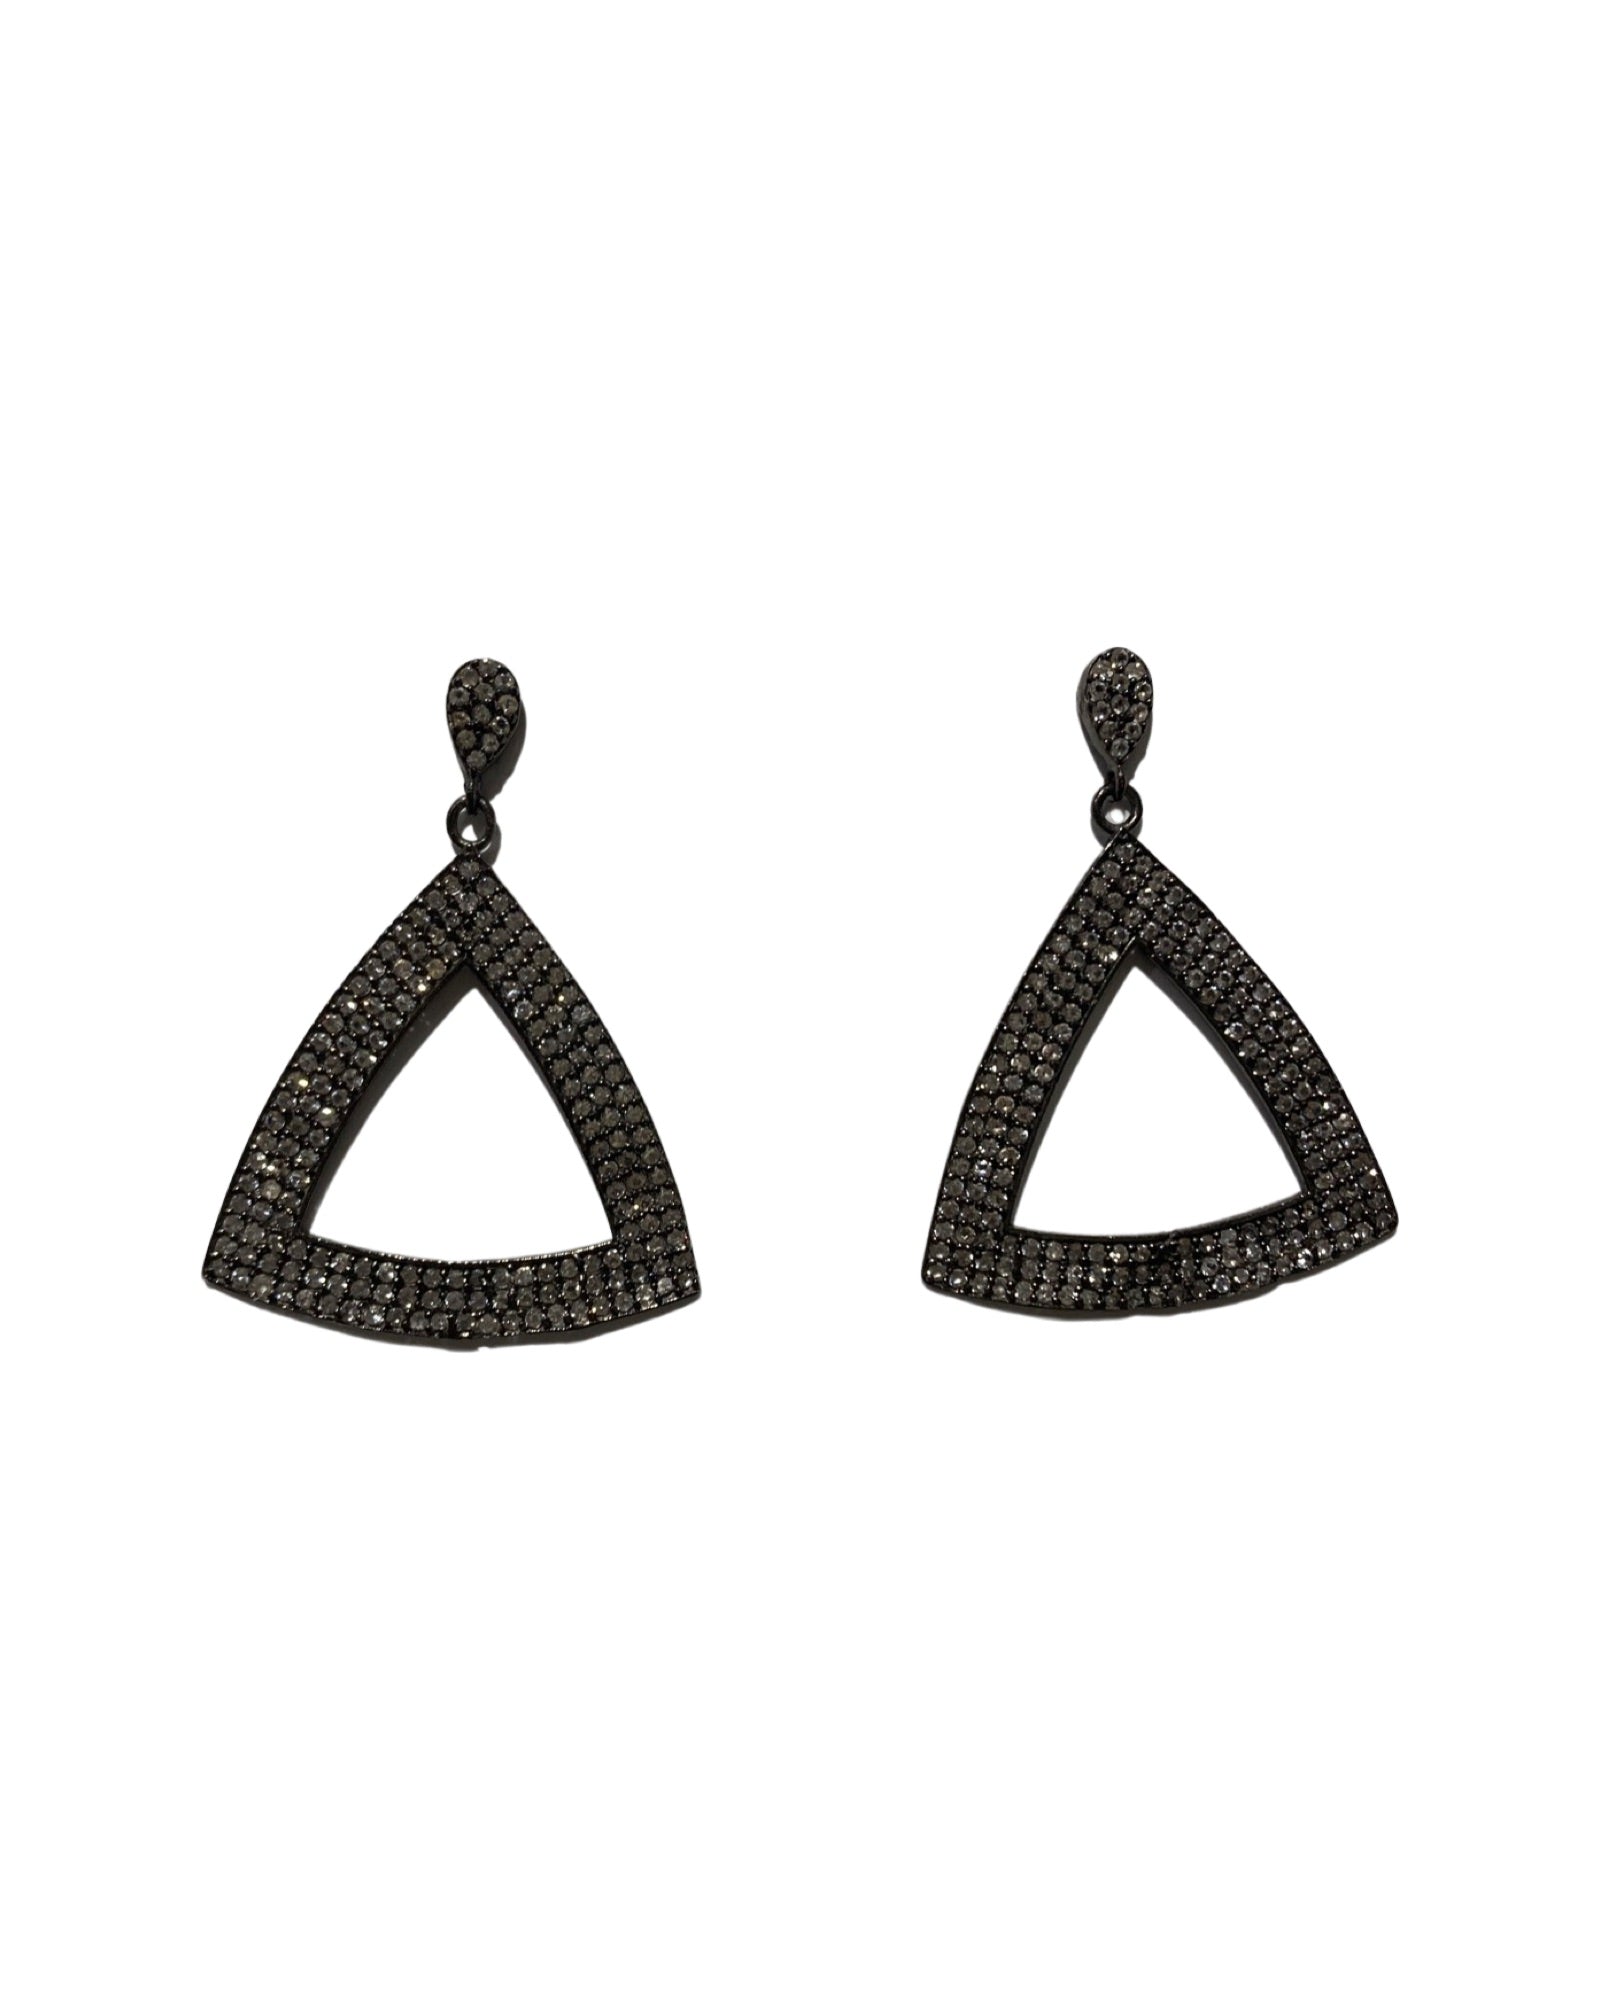 Studded triangle Crystal earrings